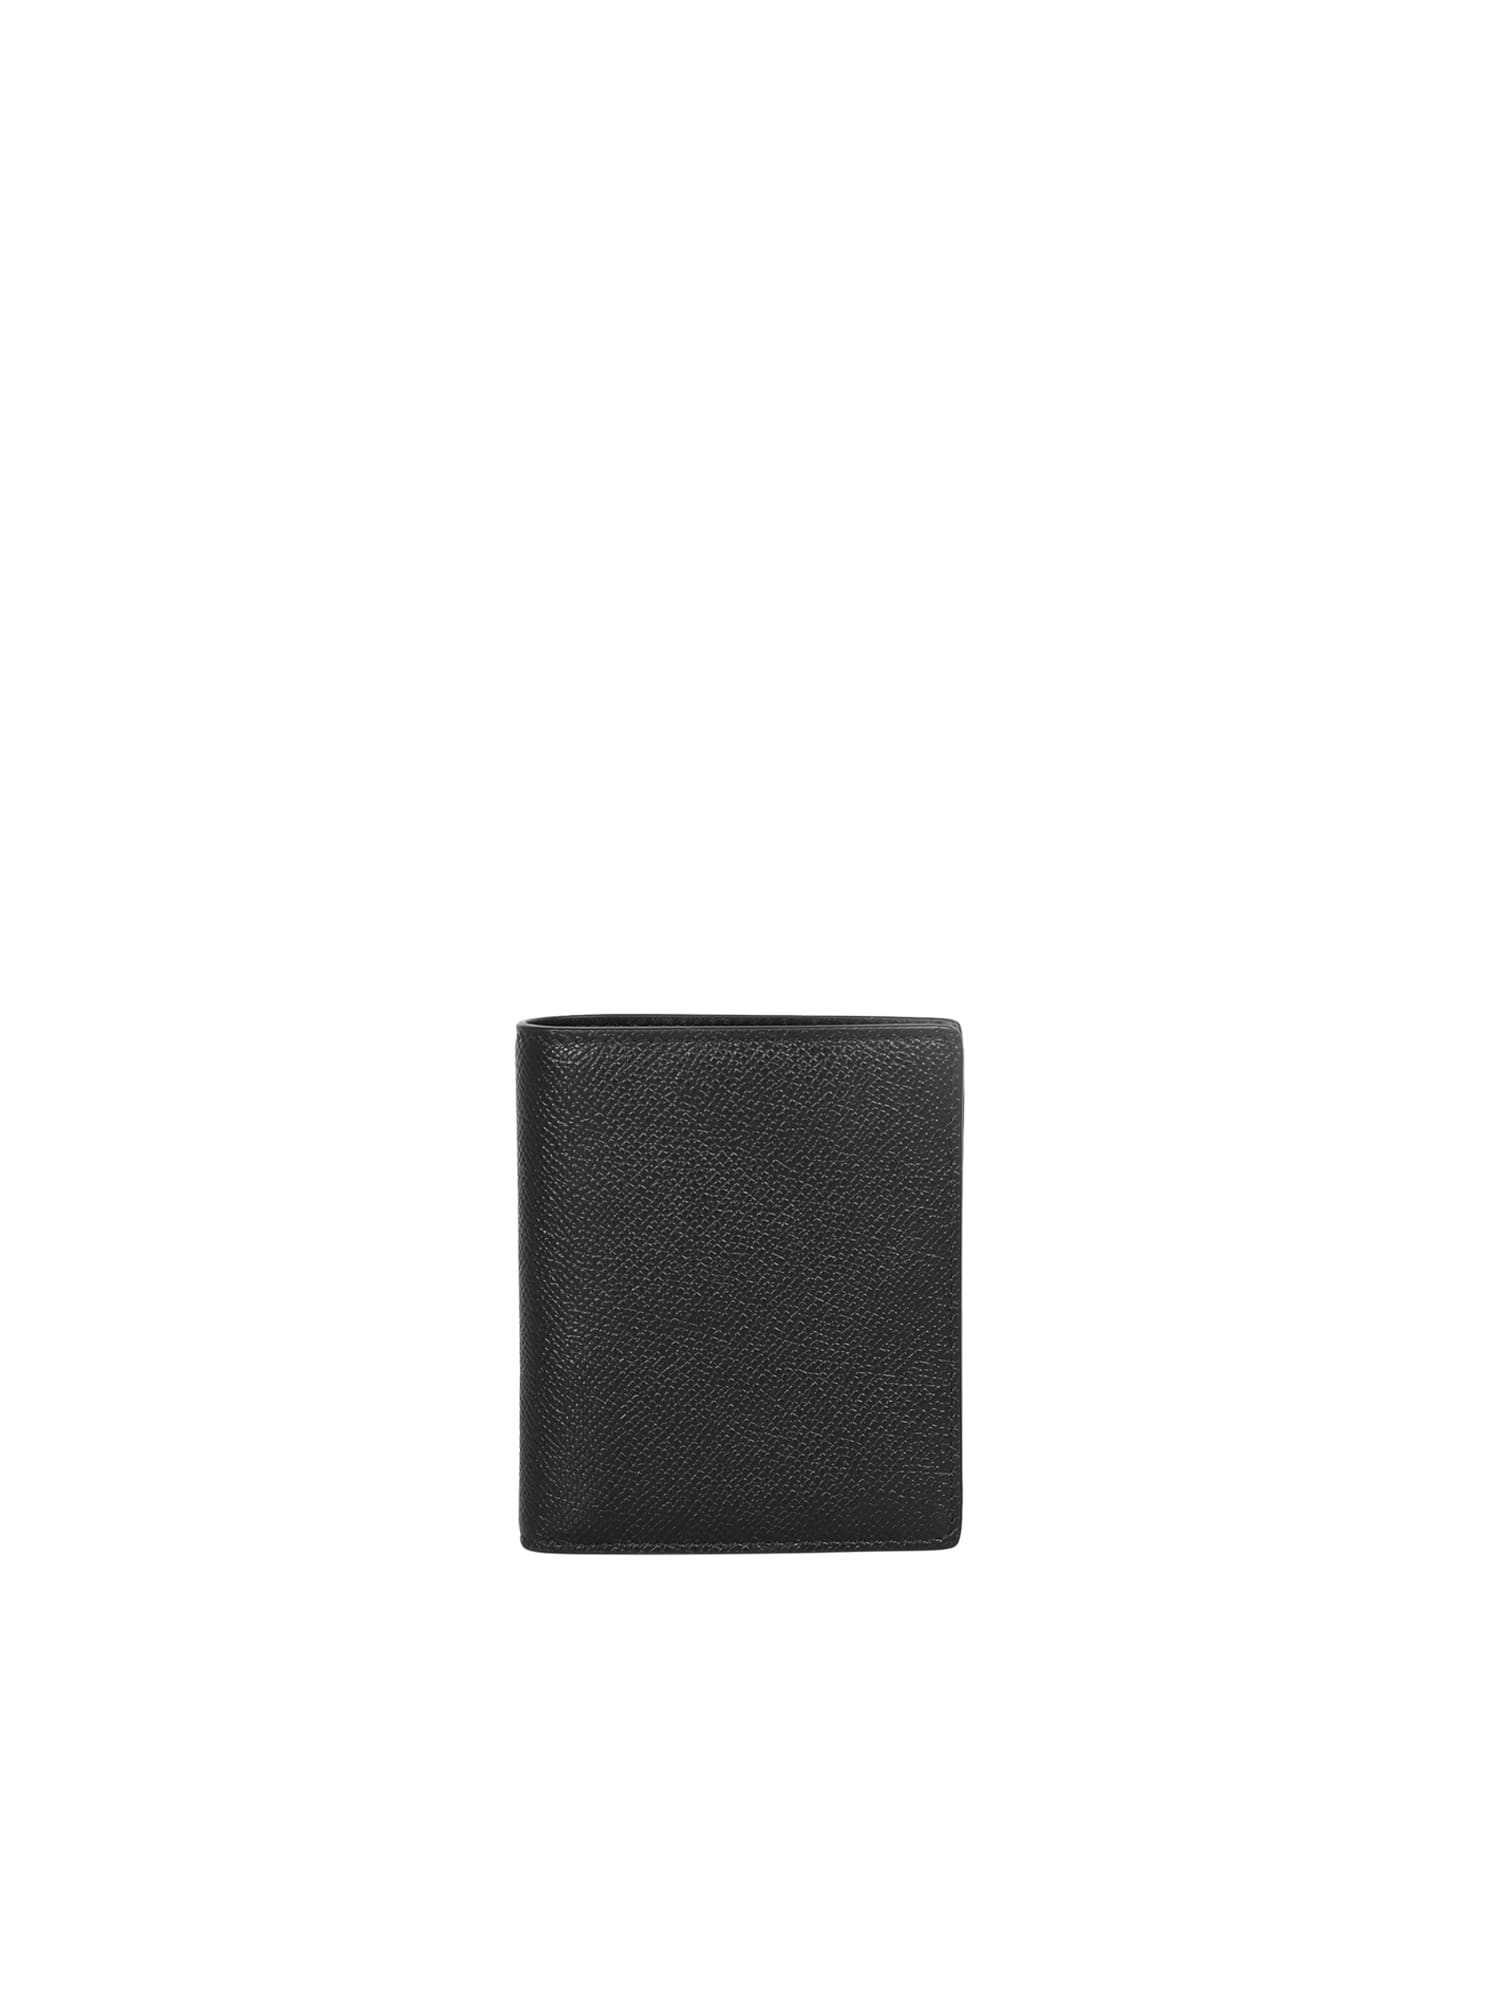 The Unmistakable Symbols Of Maison Margiela Symbolize This Bi-fold Design Wallet